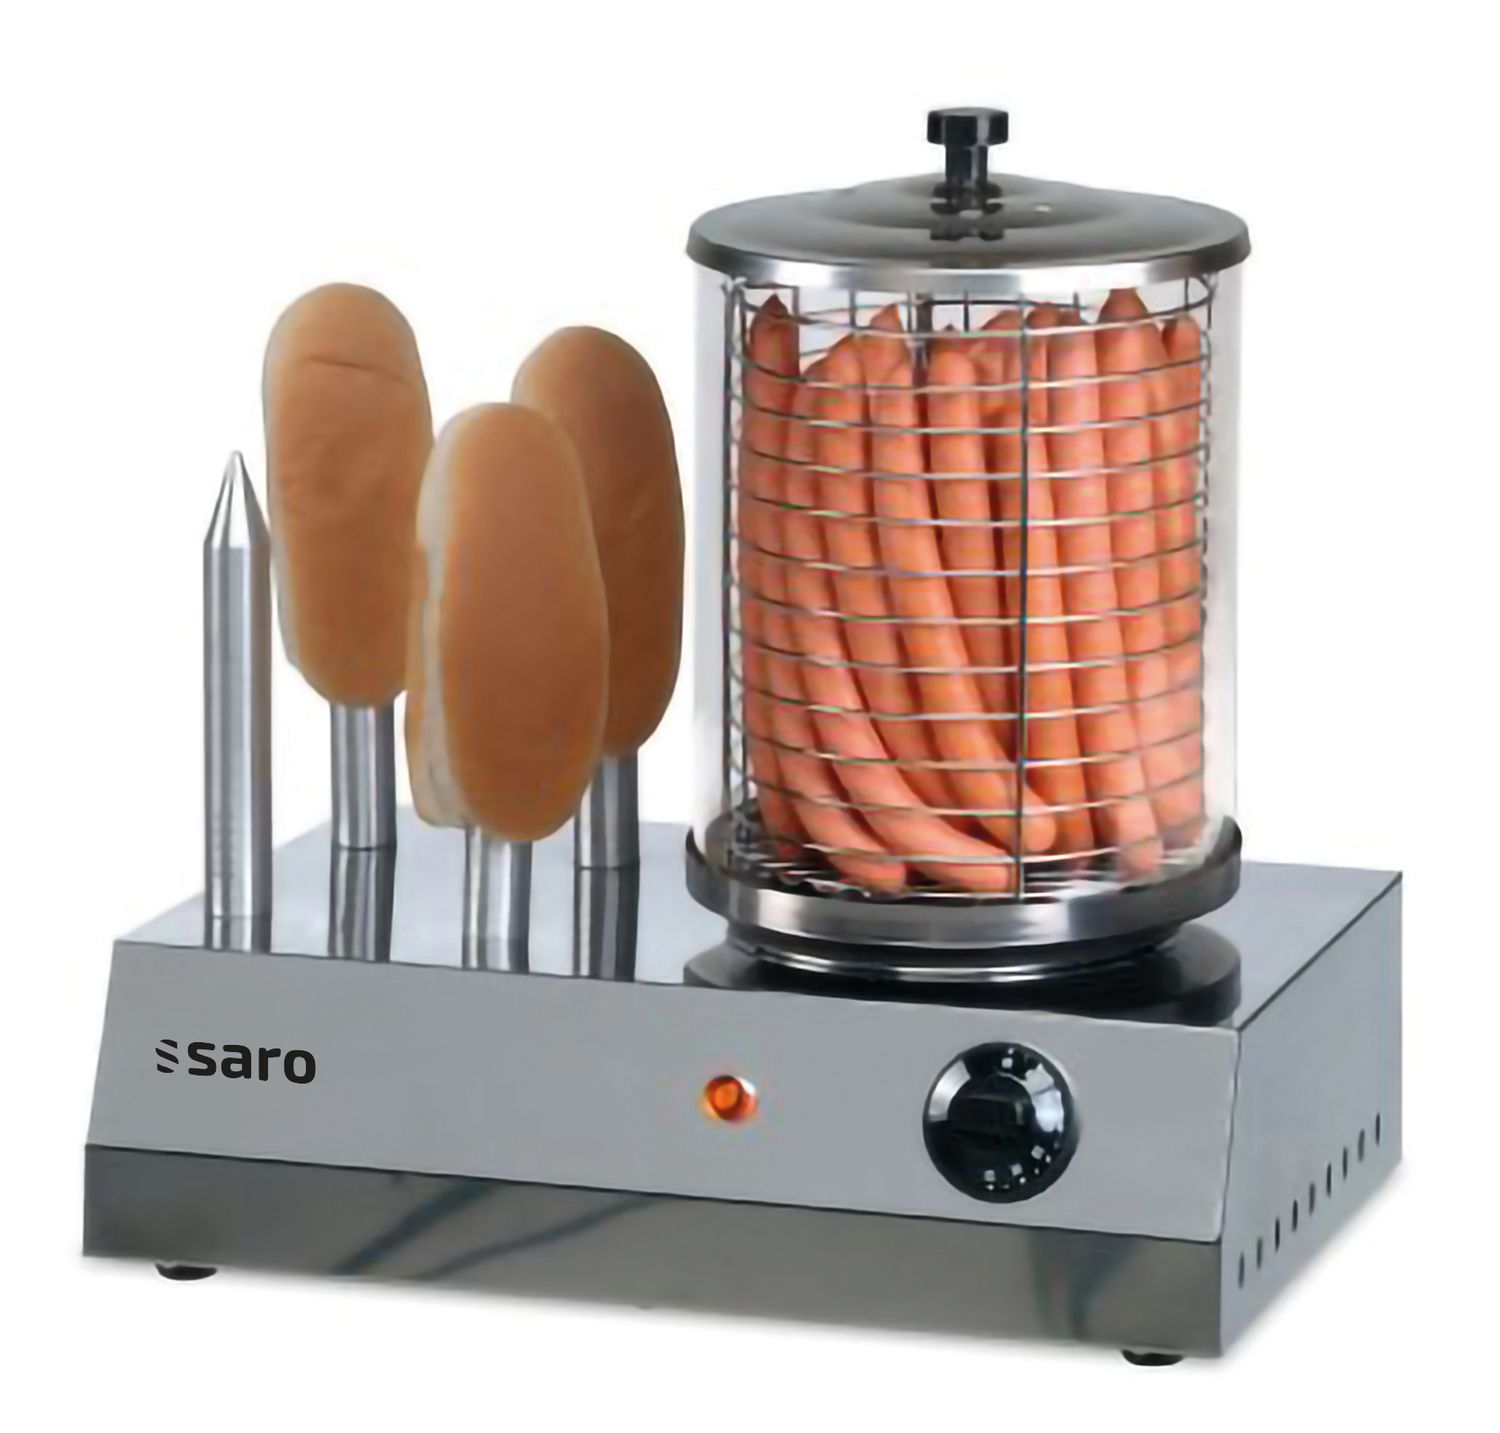 Macchina per hot dog, scalda hot dog, scalda salsicce - Modello CS-400,  acciaio inox 